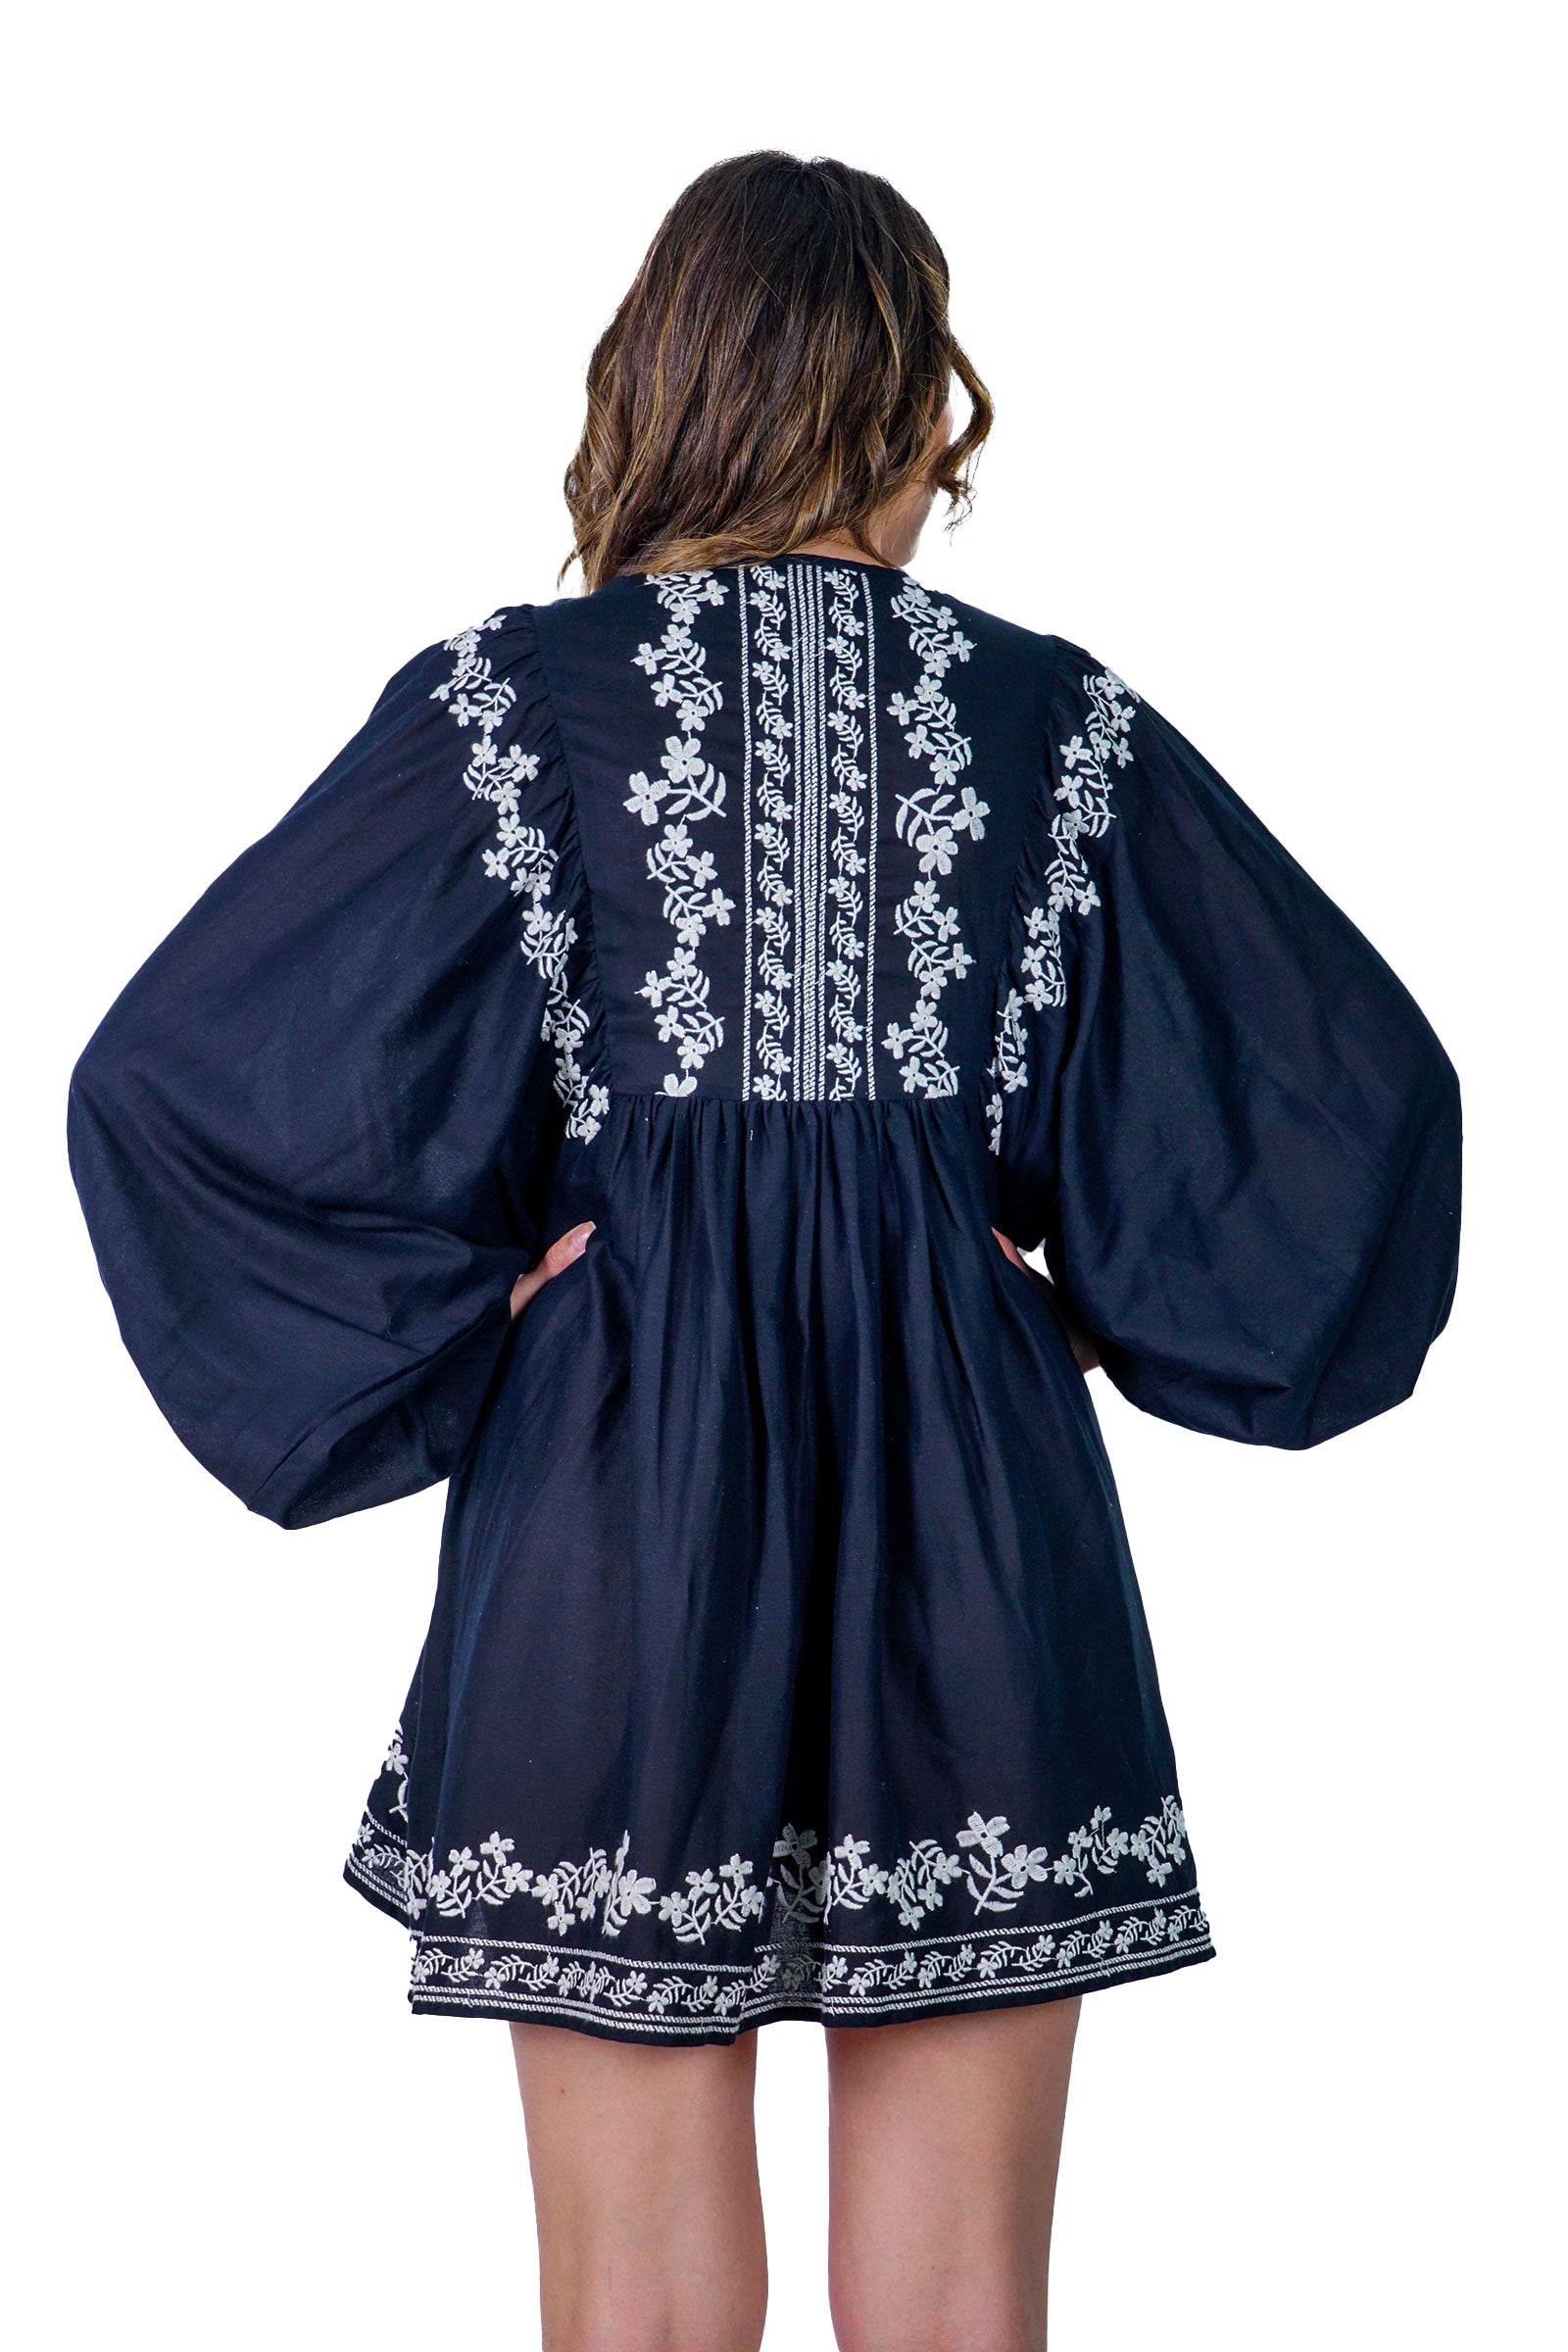 Lorenza Black Mini Dress (Embroidered)